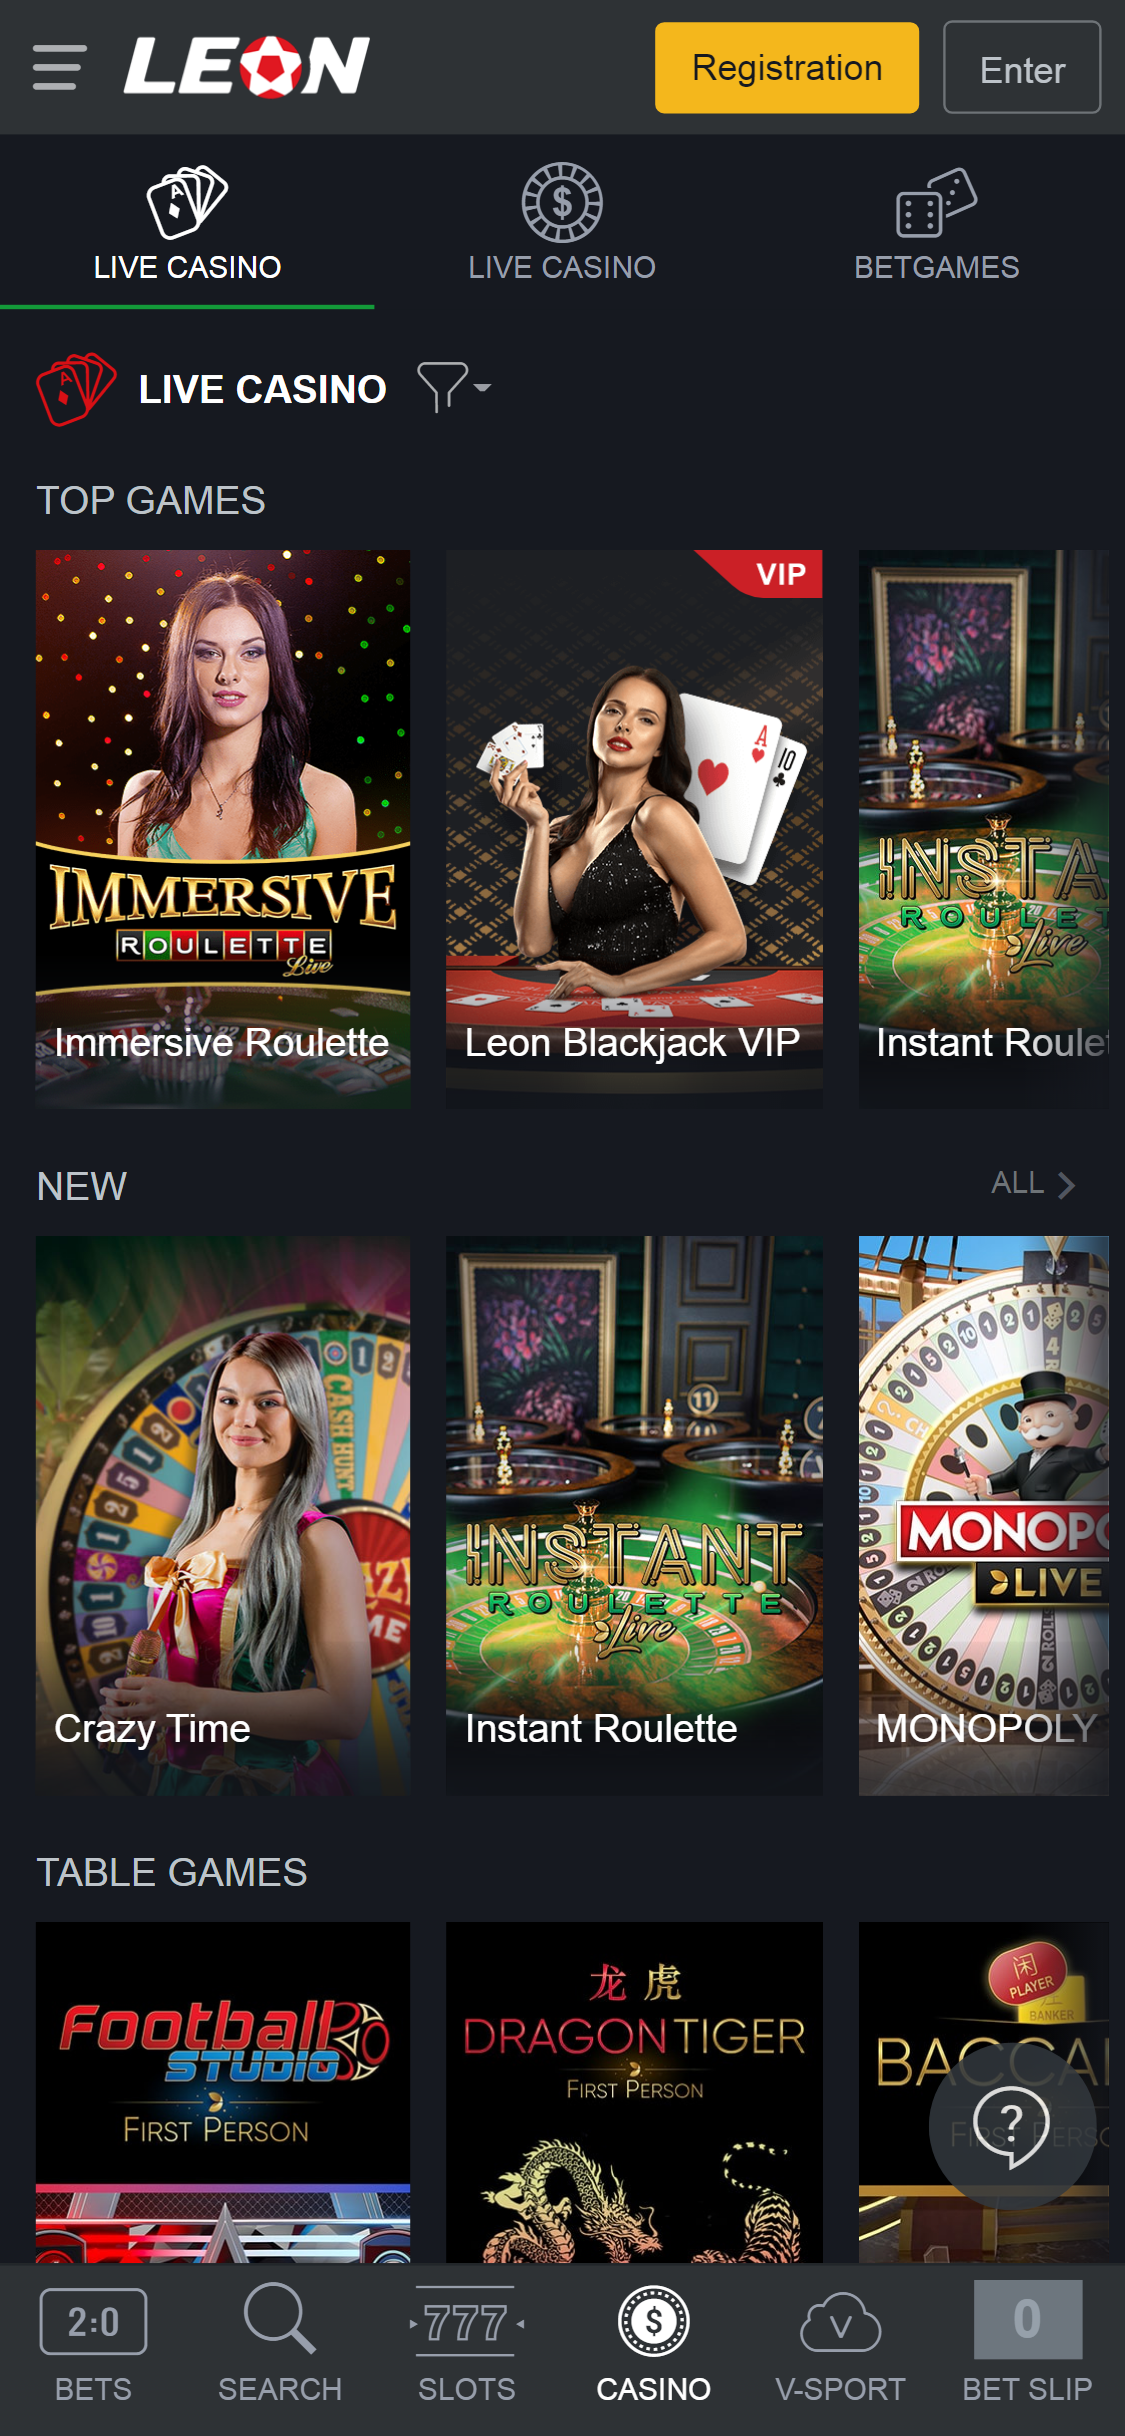 Leon Casino Mobile Live Dealer Games Review